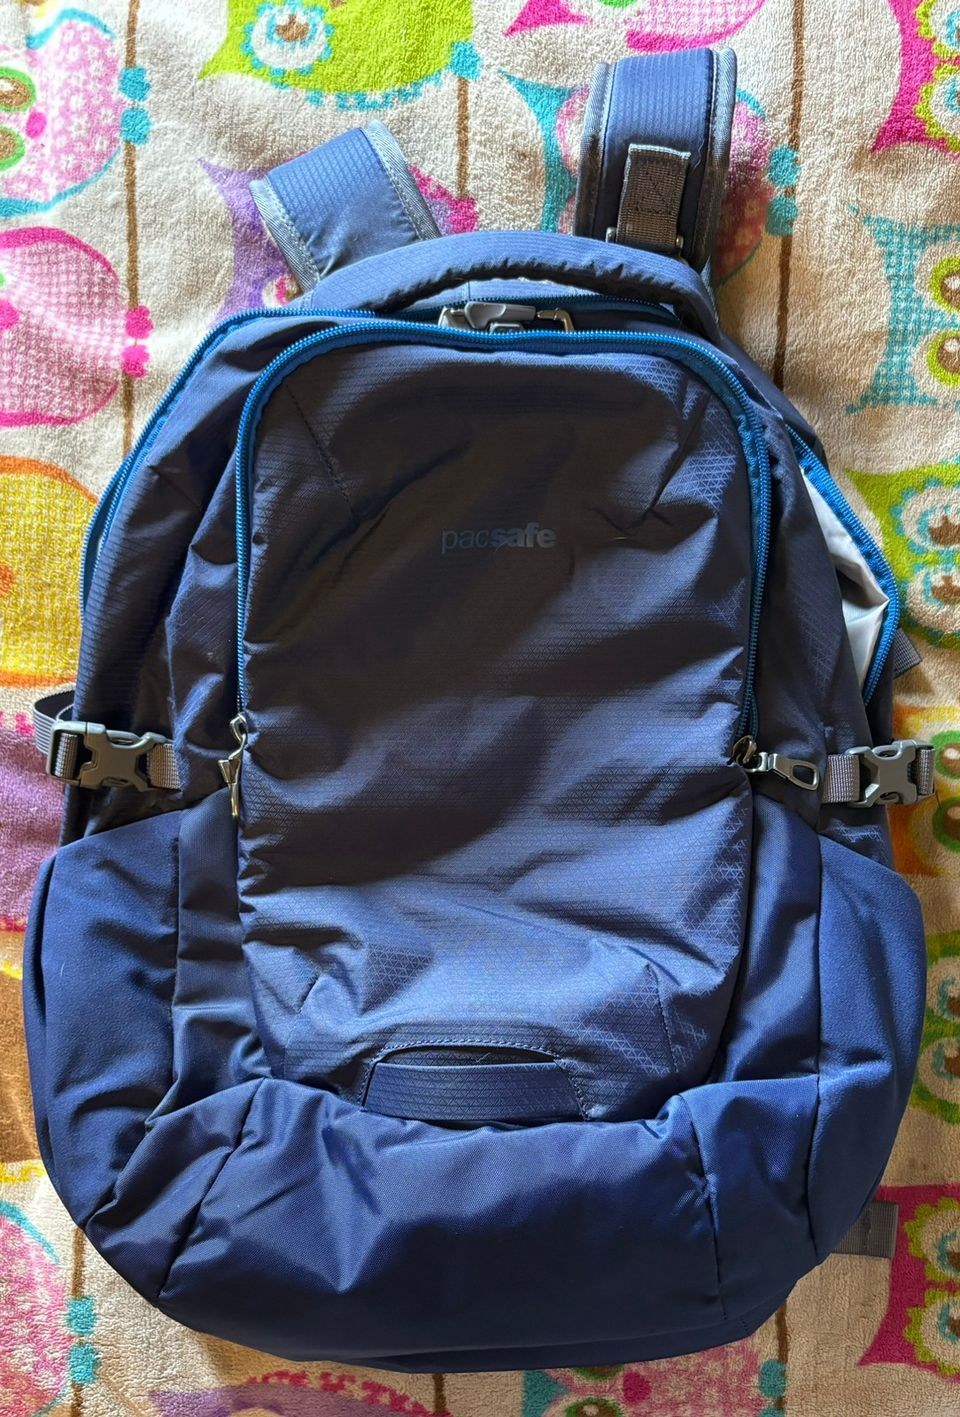 Pacsafe Venturesafe G3 25l Anti-Theft Backpack